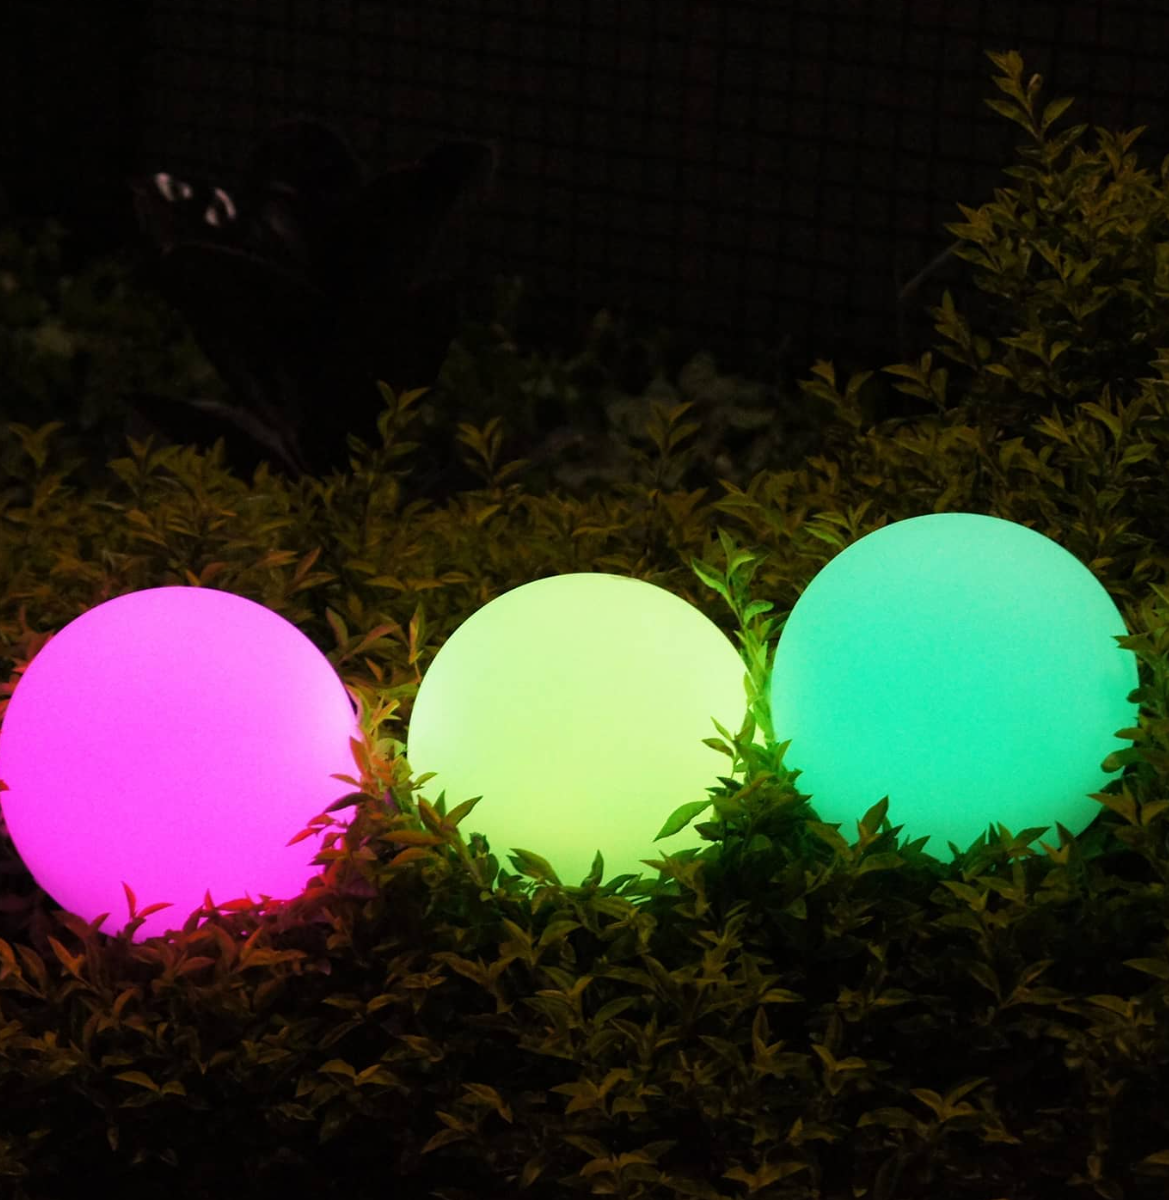 Colour Light up Balls